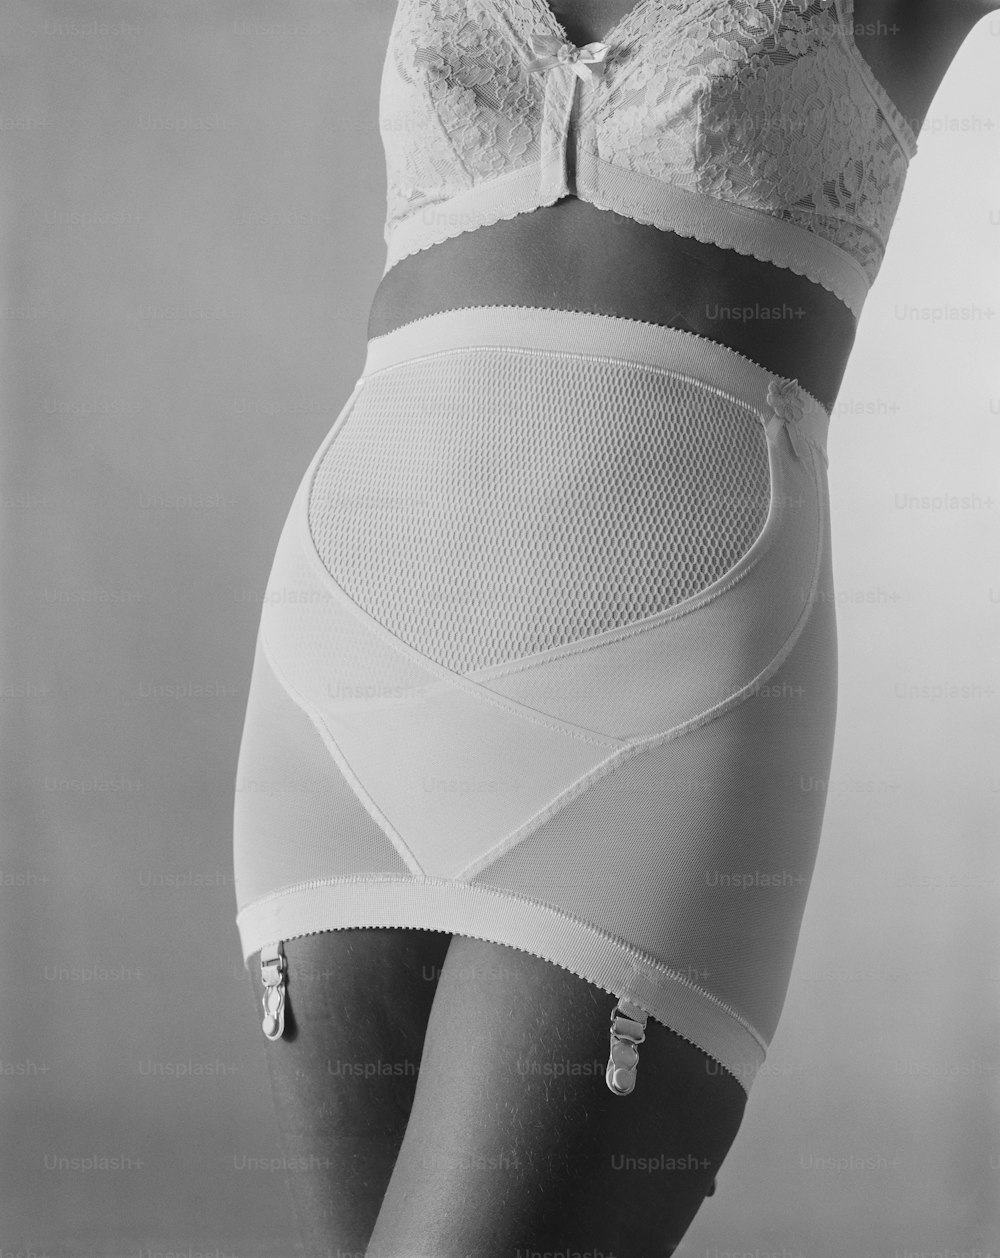 50,000+ Underwear Set Pictures  Download Free Images on Unsplash